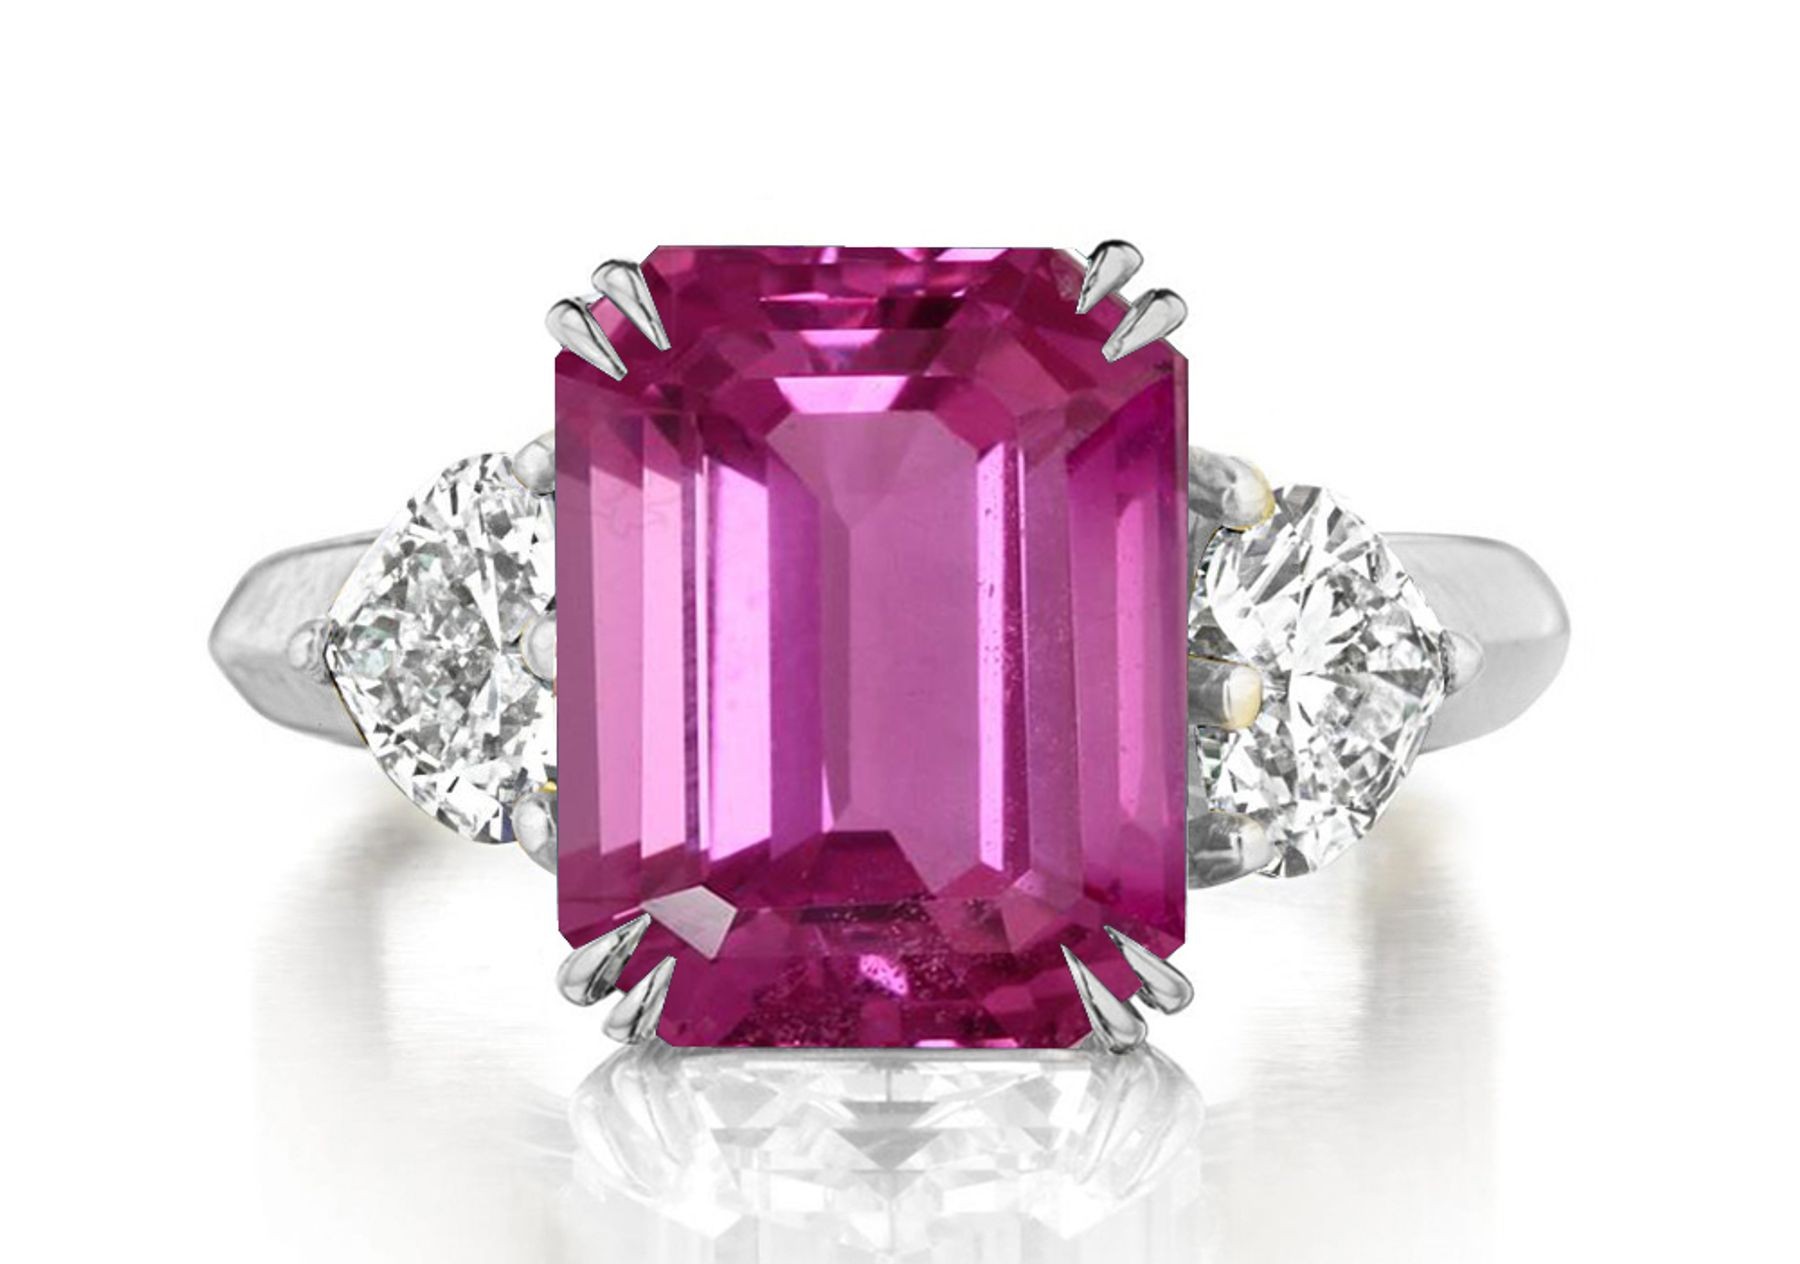 Premium Quality Unique Heart Shaped Diamonds & Pink Sapphire Emerald Cut Three Stone Rings